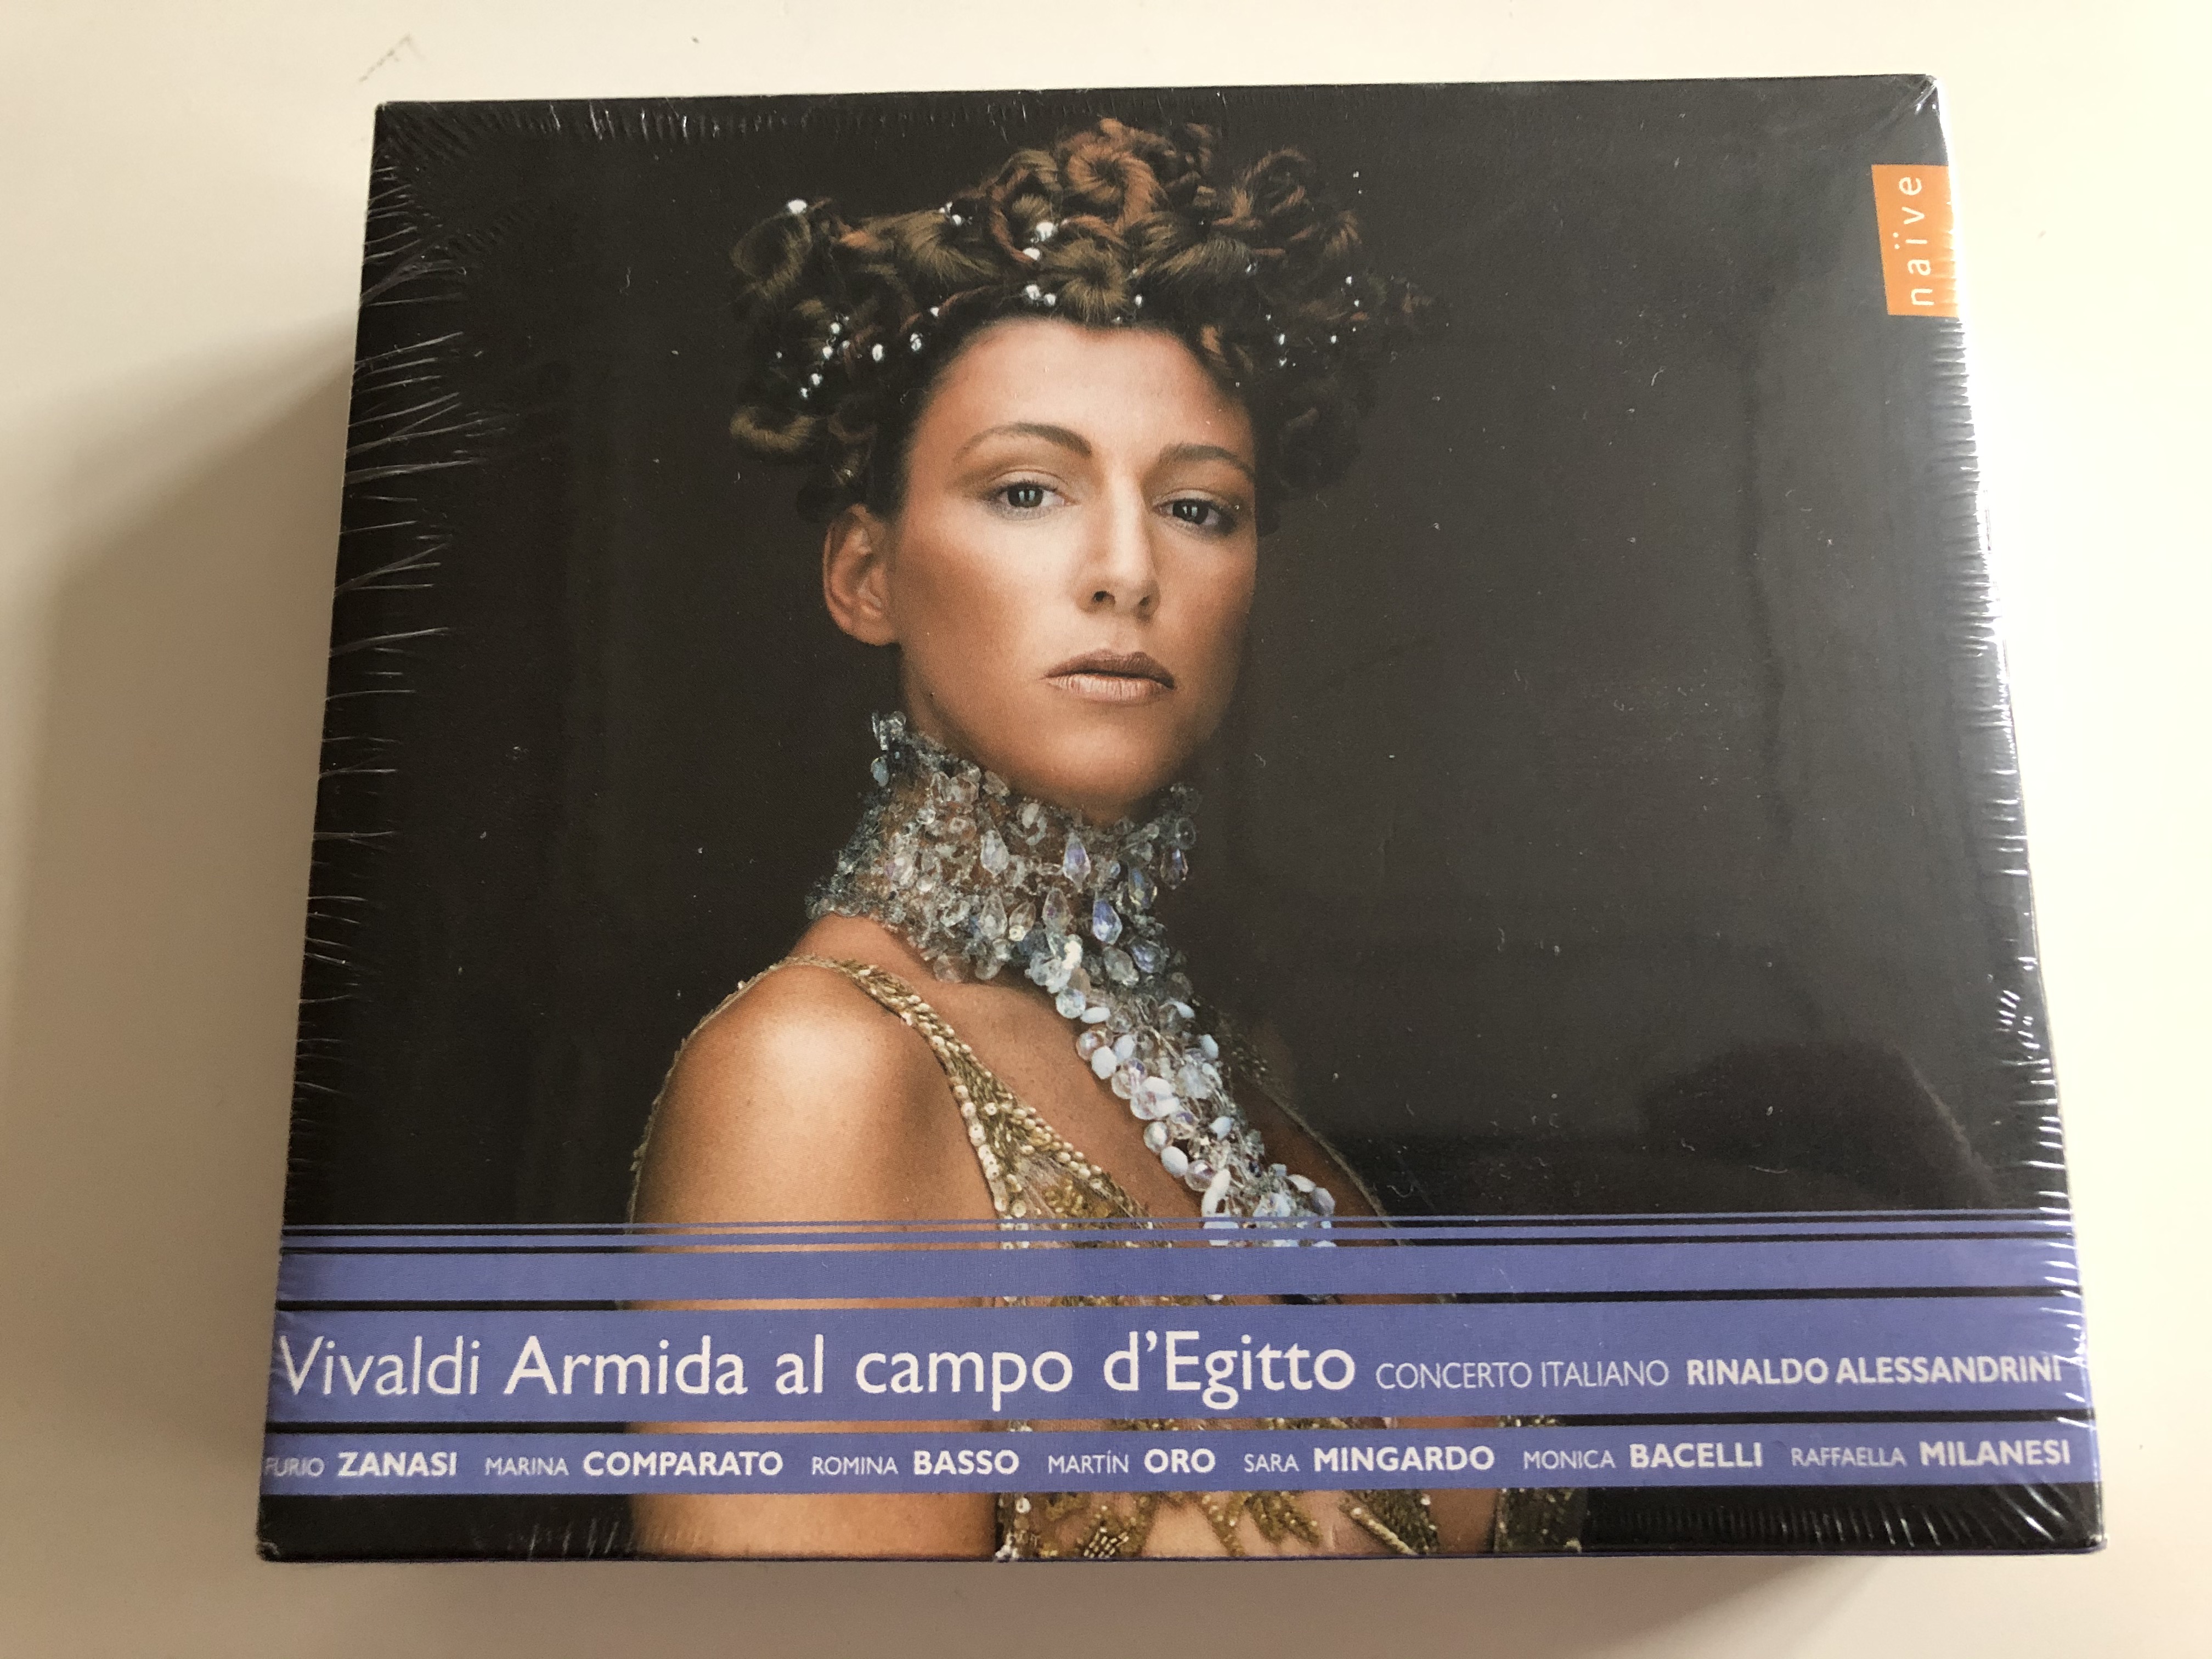 vivaldi-armida-al-campo-d-egitto-concerto-italiano-rinaldo-alessandrini-na-ve-3x-audio-cd-2010-op-30492-1-.jpg